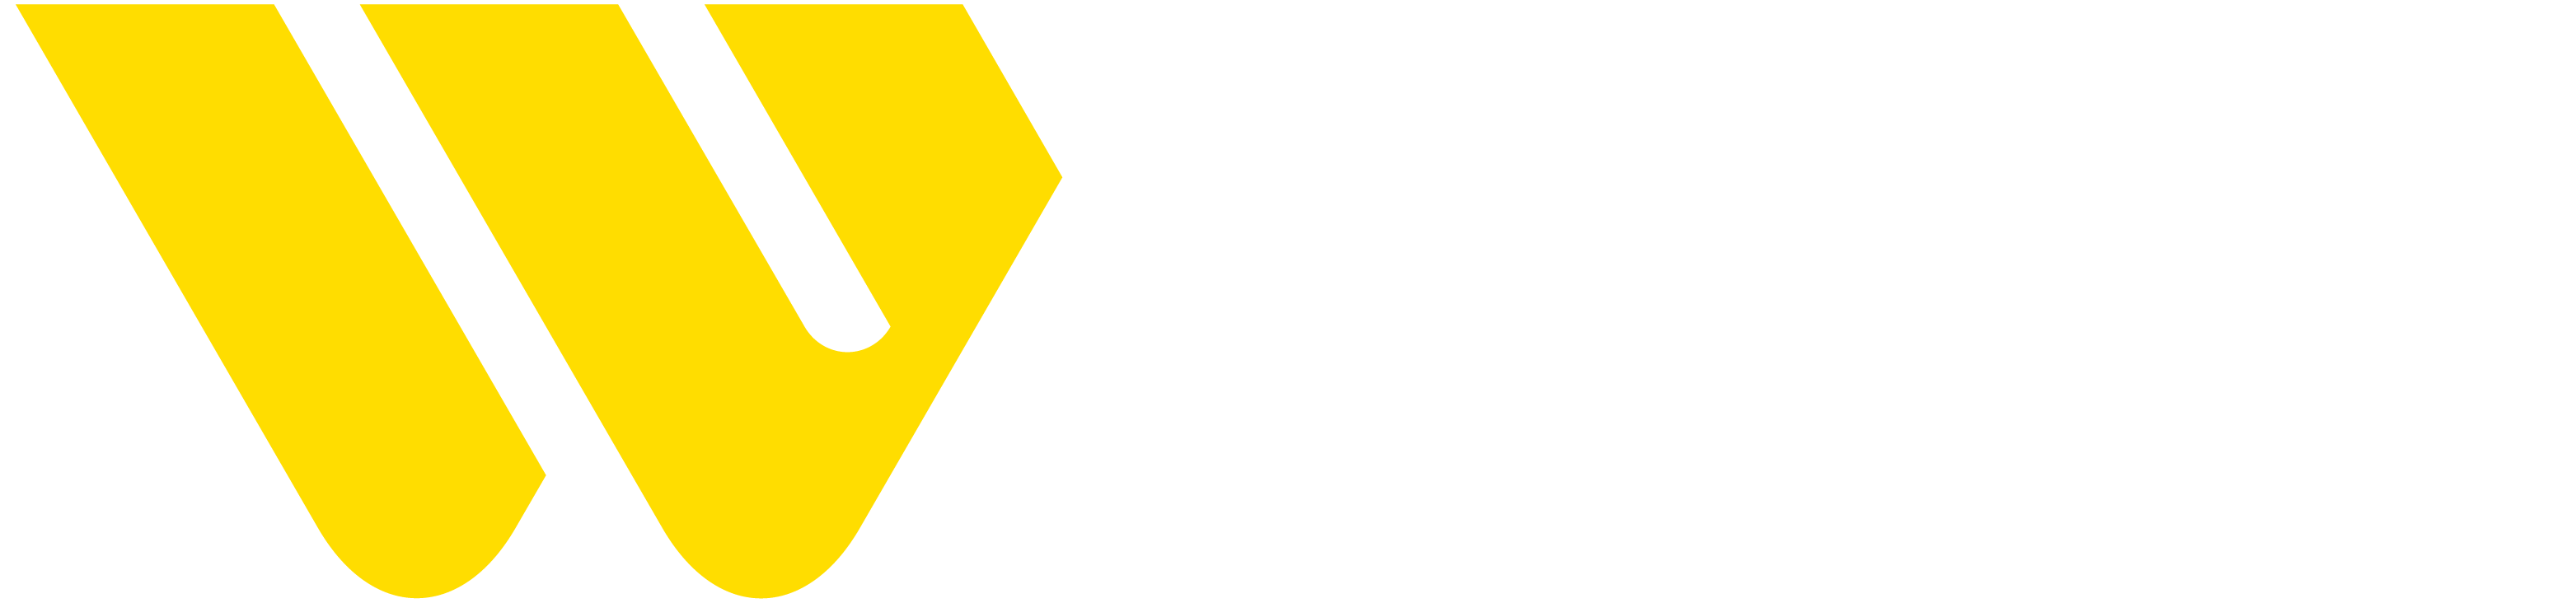 WesternUnionBanner